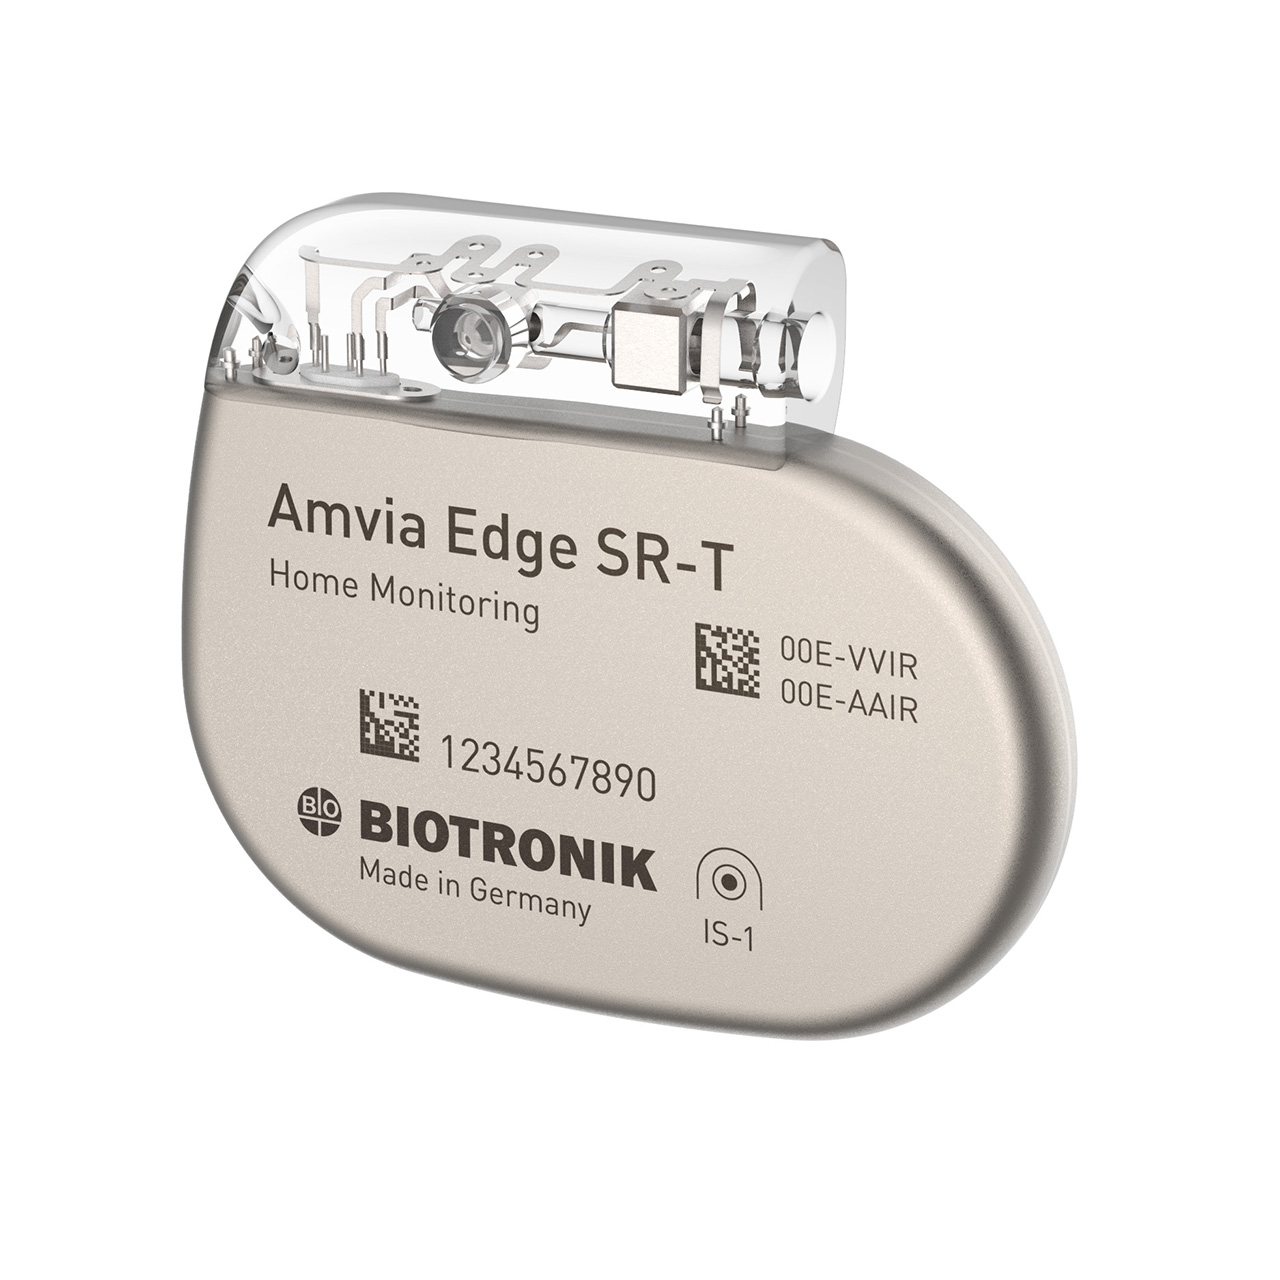 Amvia Edge SR-T single-chamber pacemaker